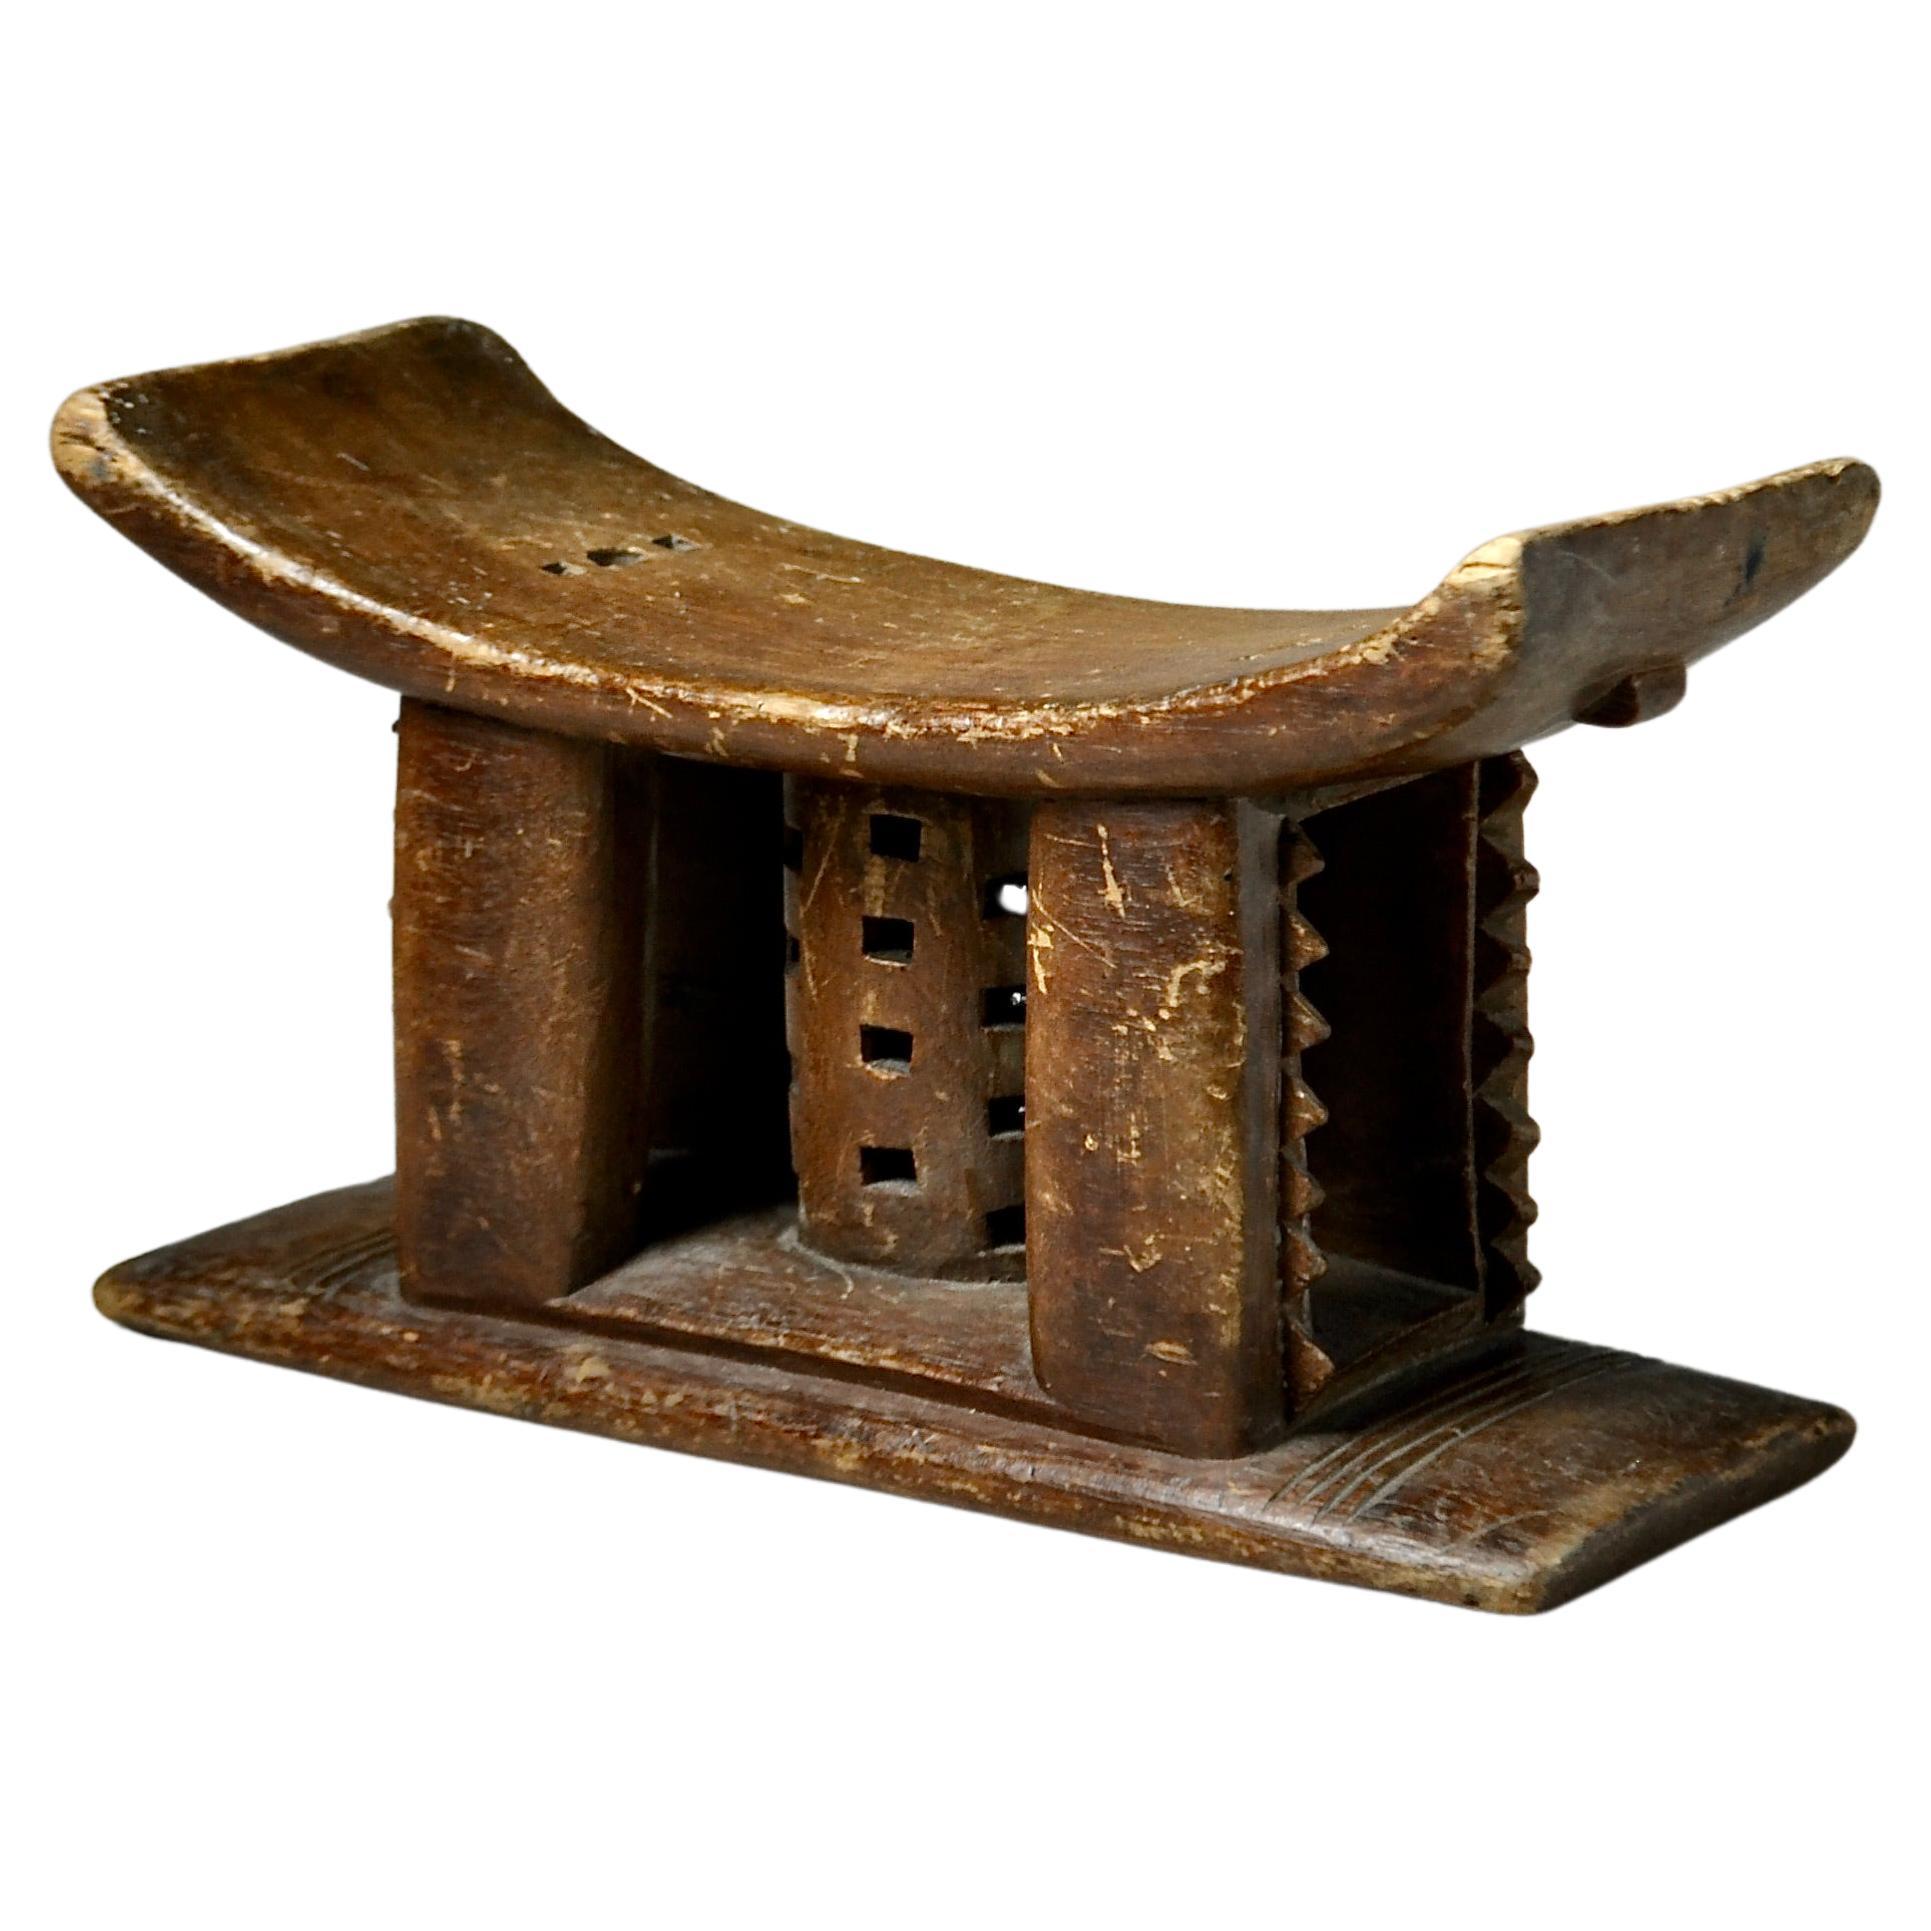 Asante stool For Sale